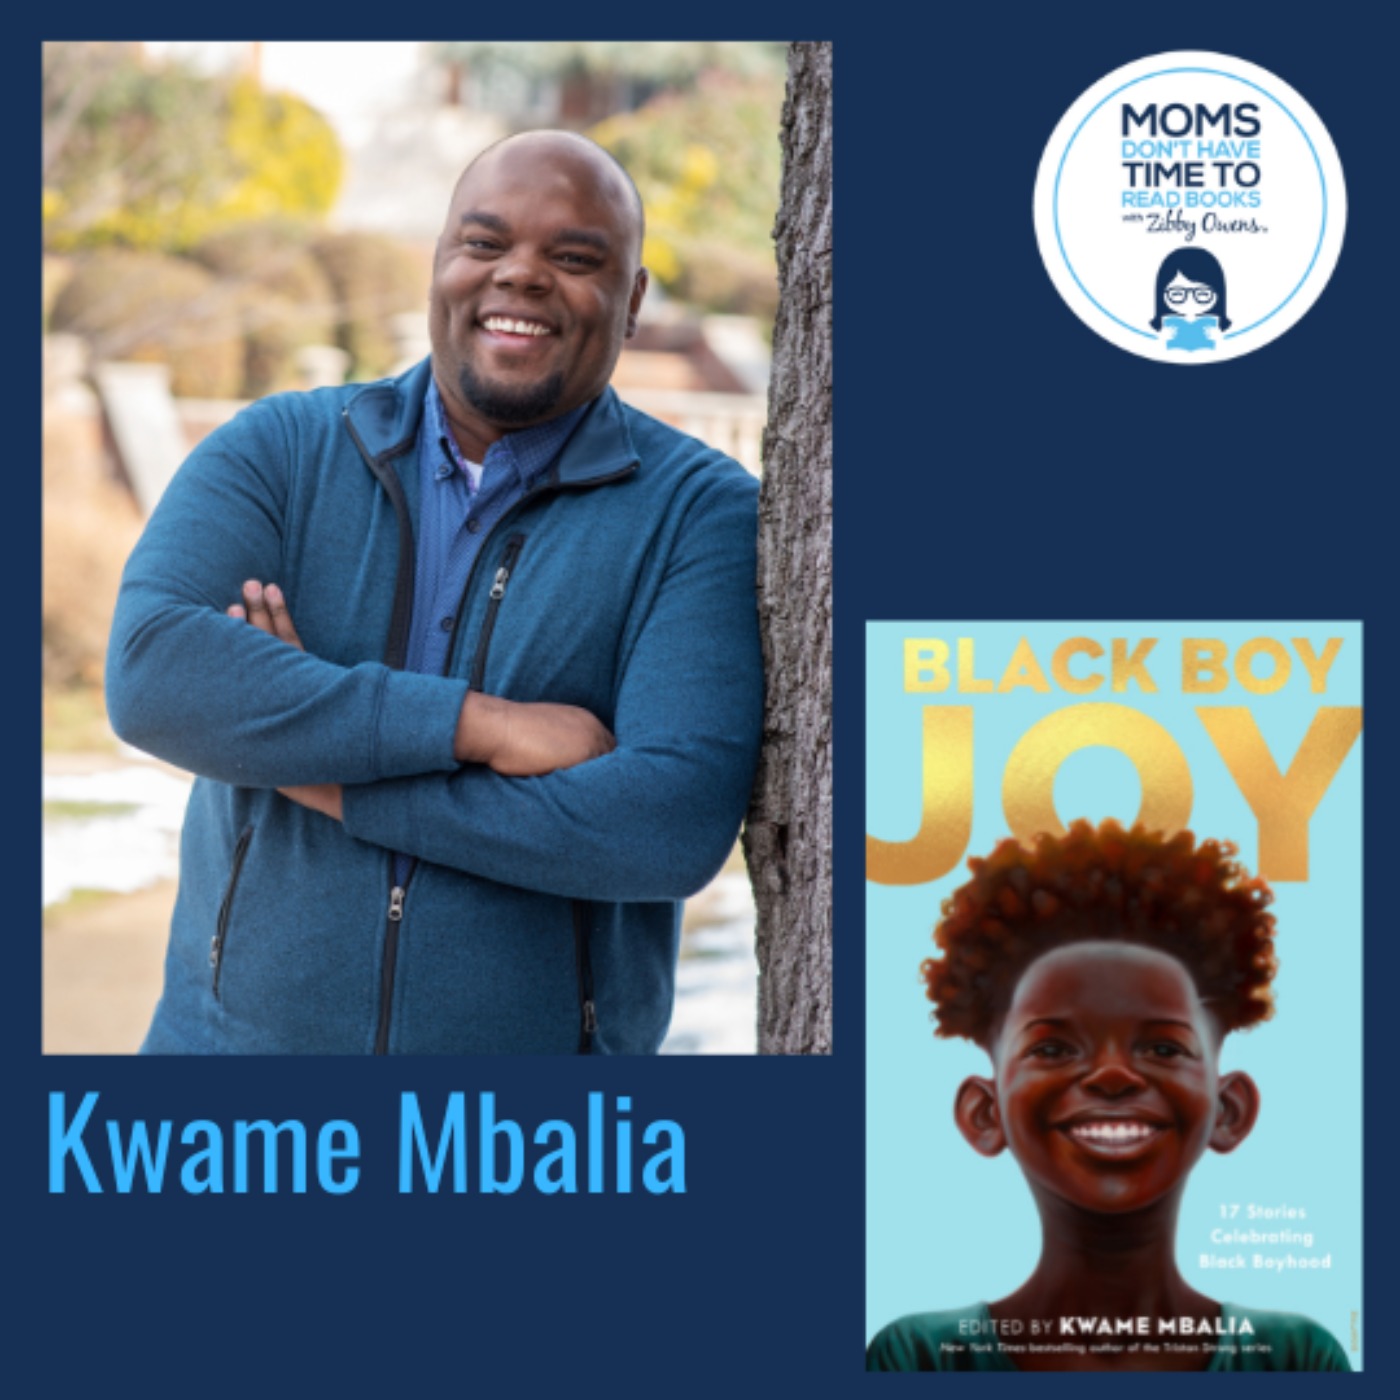 Kwame Mbalia, BLACK BOY JOY: 17 Stories Celebrating Black Boyhood